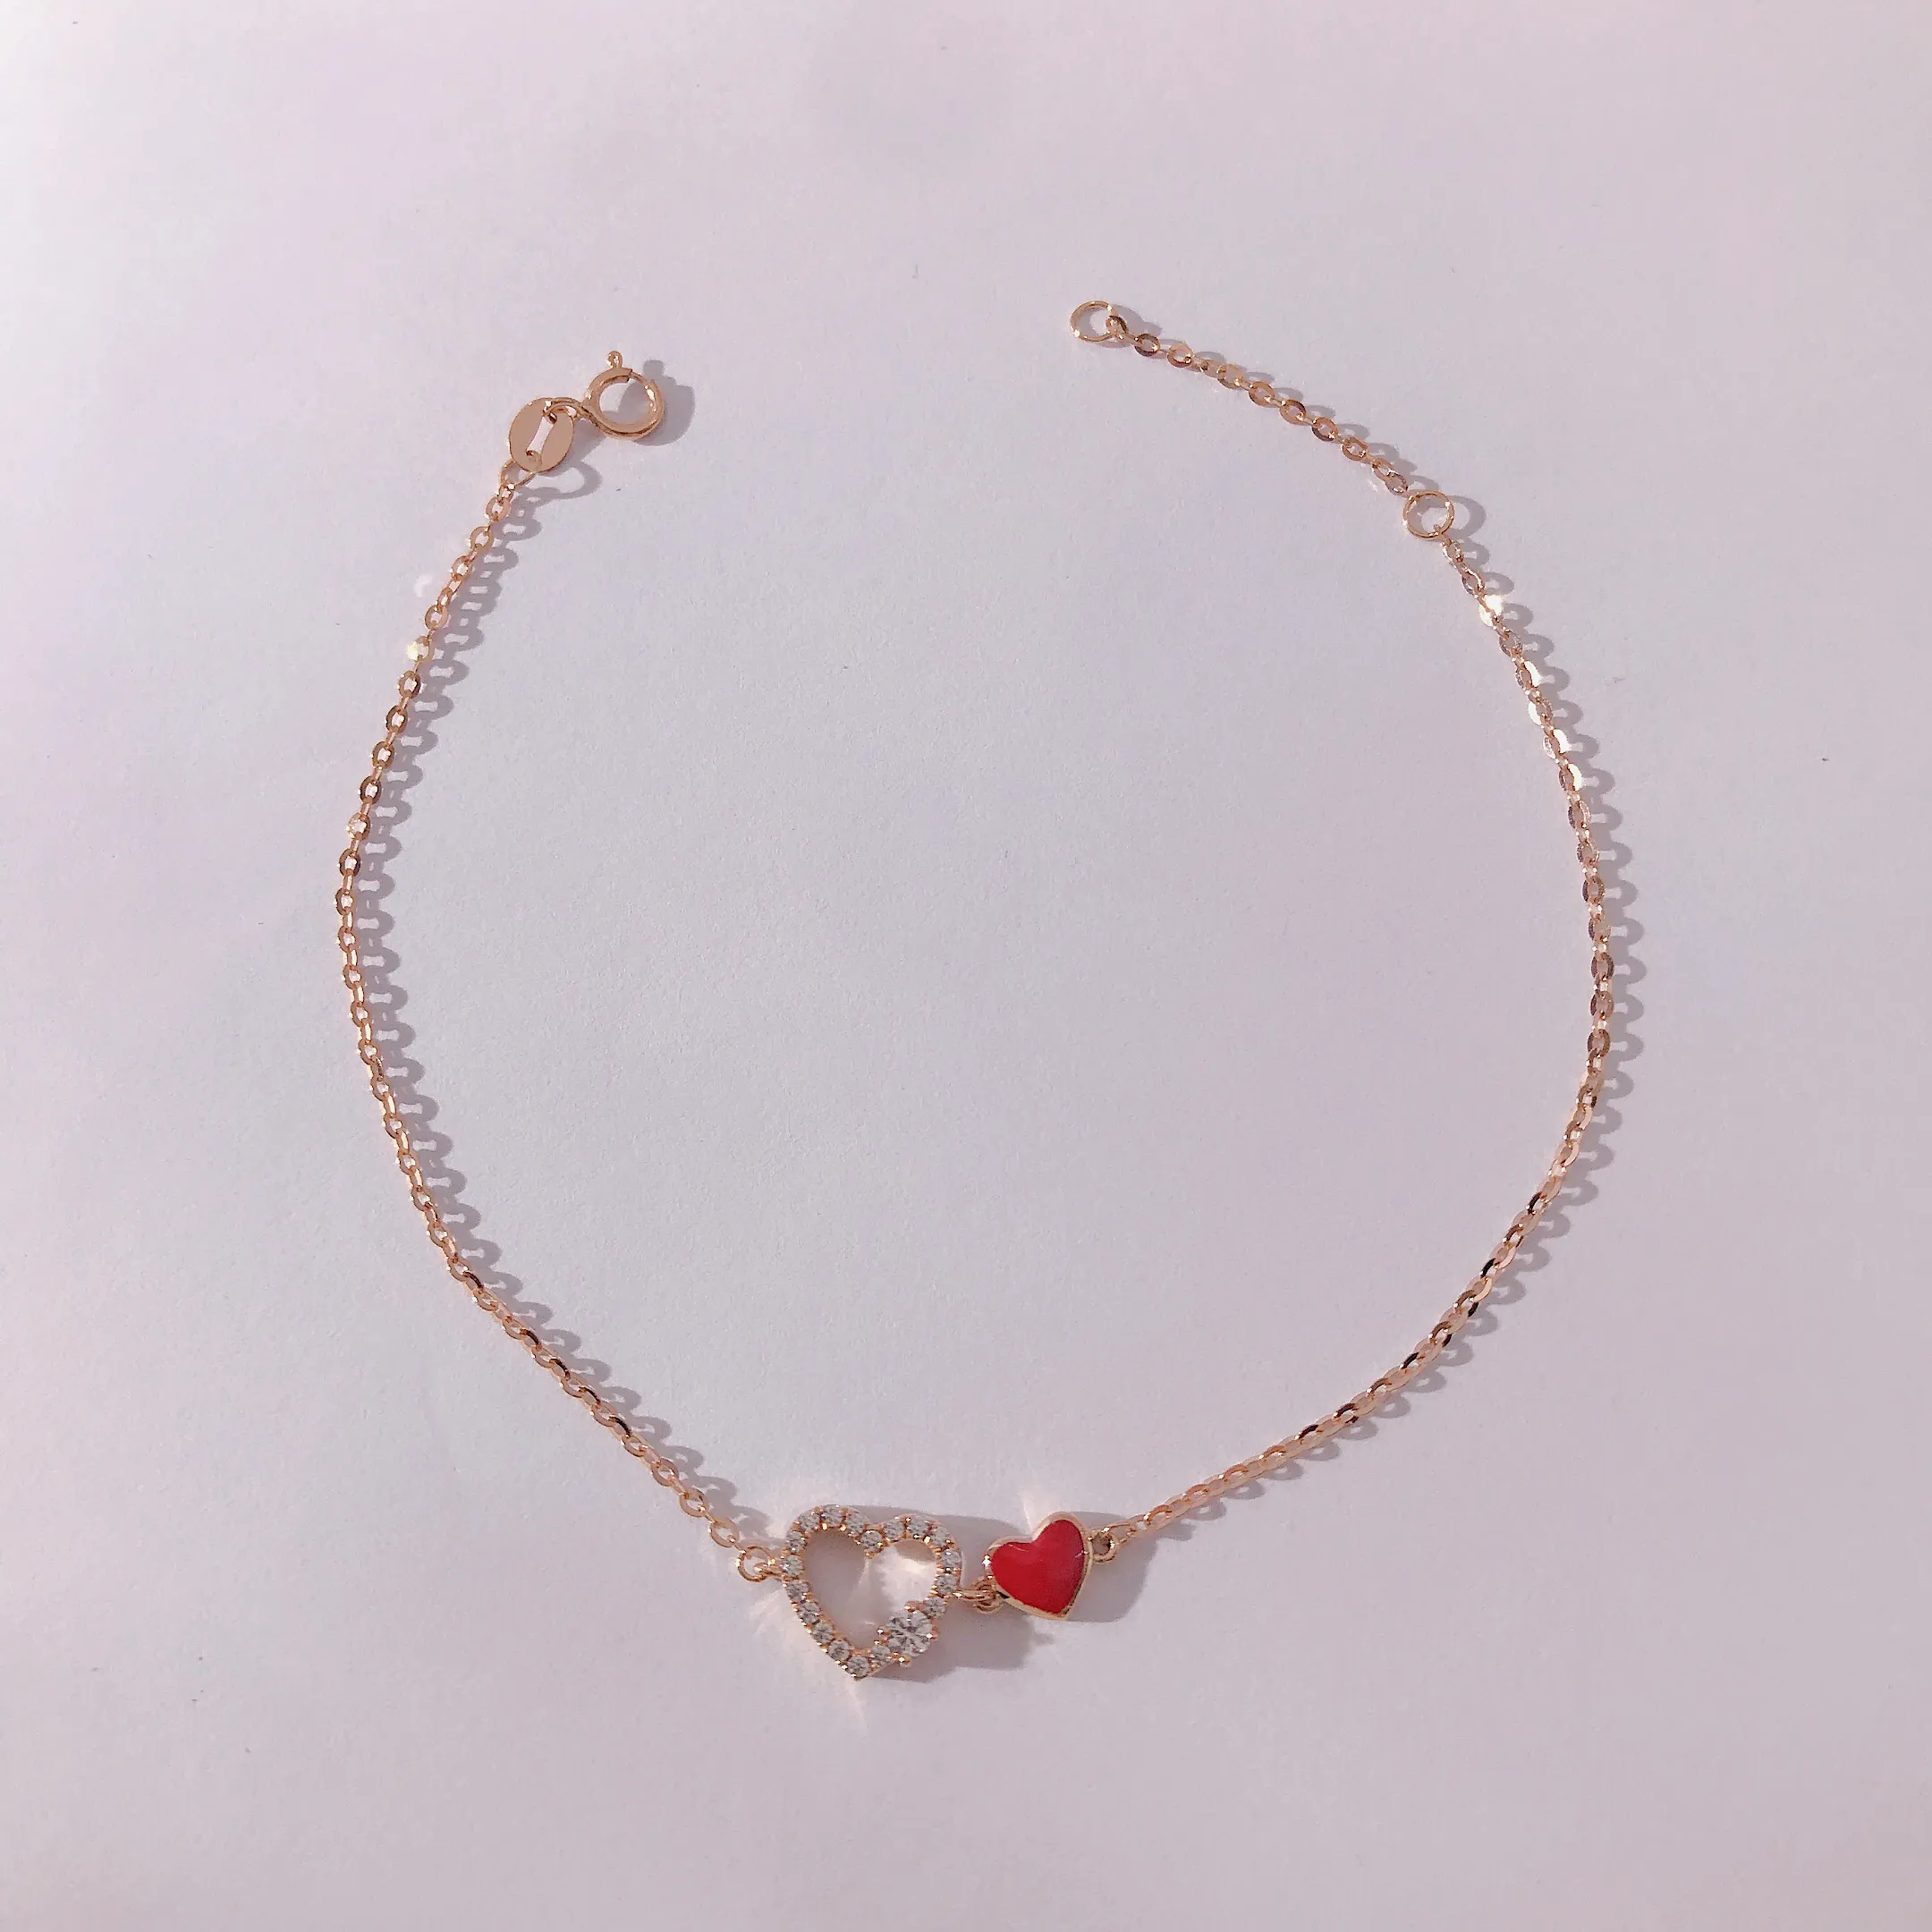 Sexy Summer 2022 New jewelry 18K Rose Gold Bracelet Charm Adjustable Red Heart Women's Bracelet